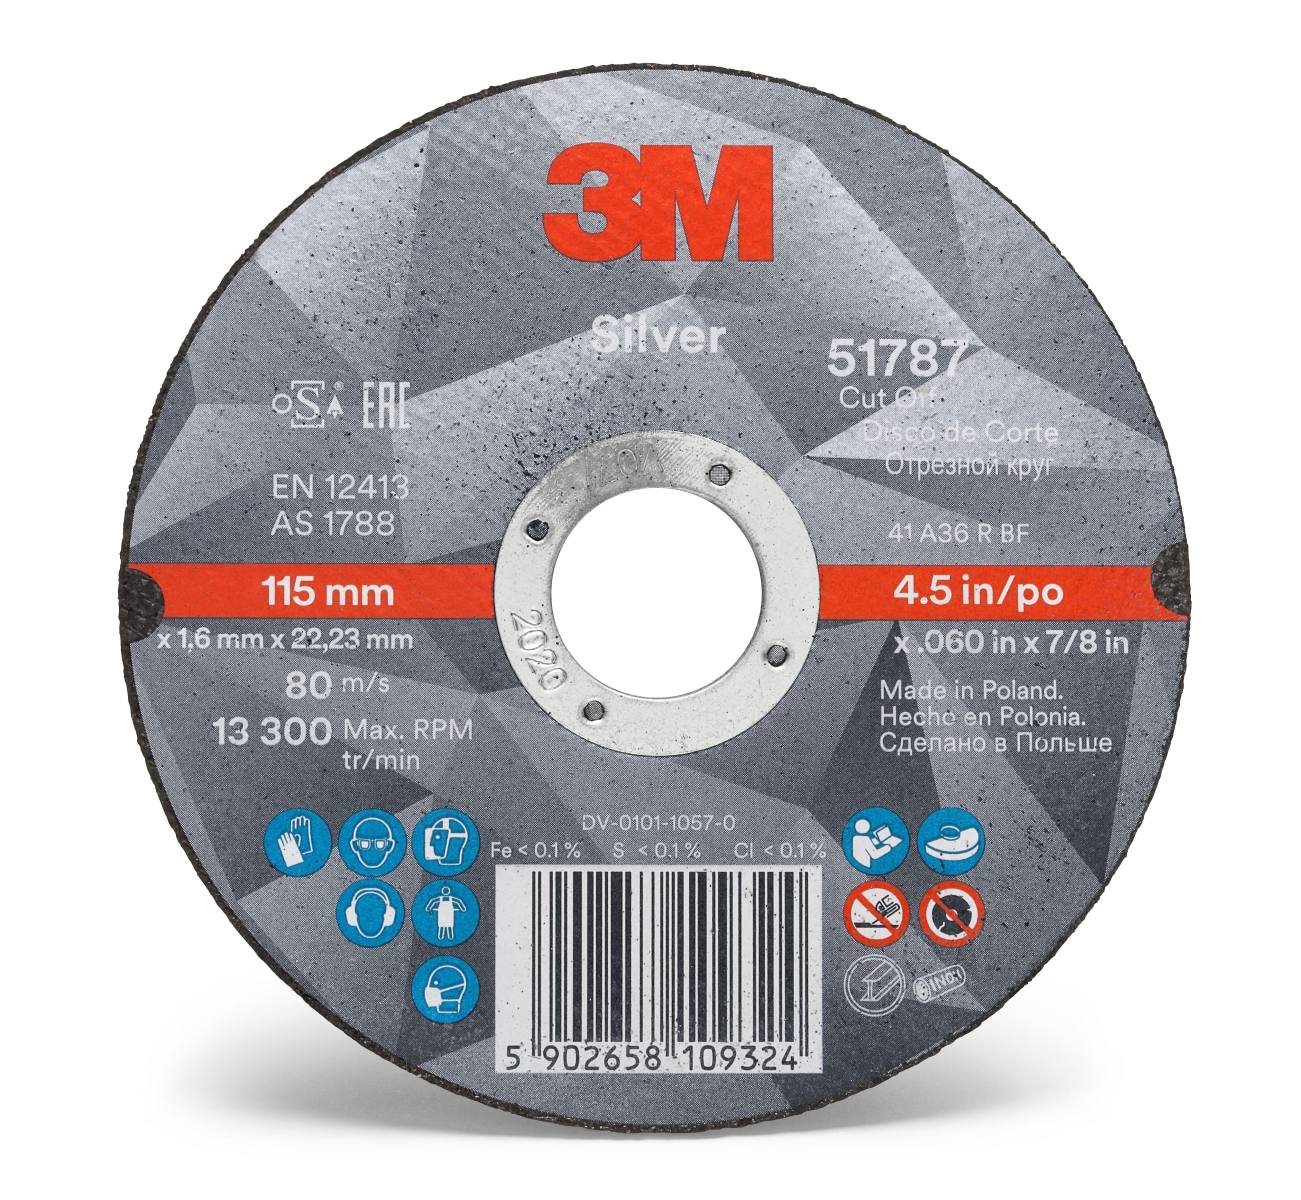 3M Silver Cut-Off Wheel Trennscheibe, 150 mm, 1,6 mm, 22,23 mm, T41, 51814